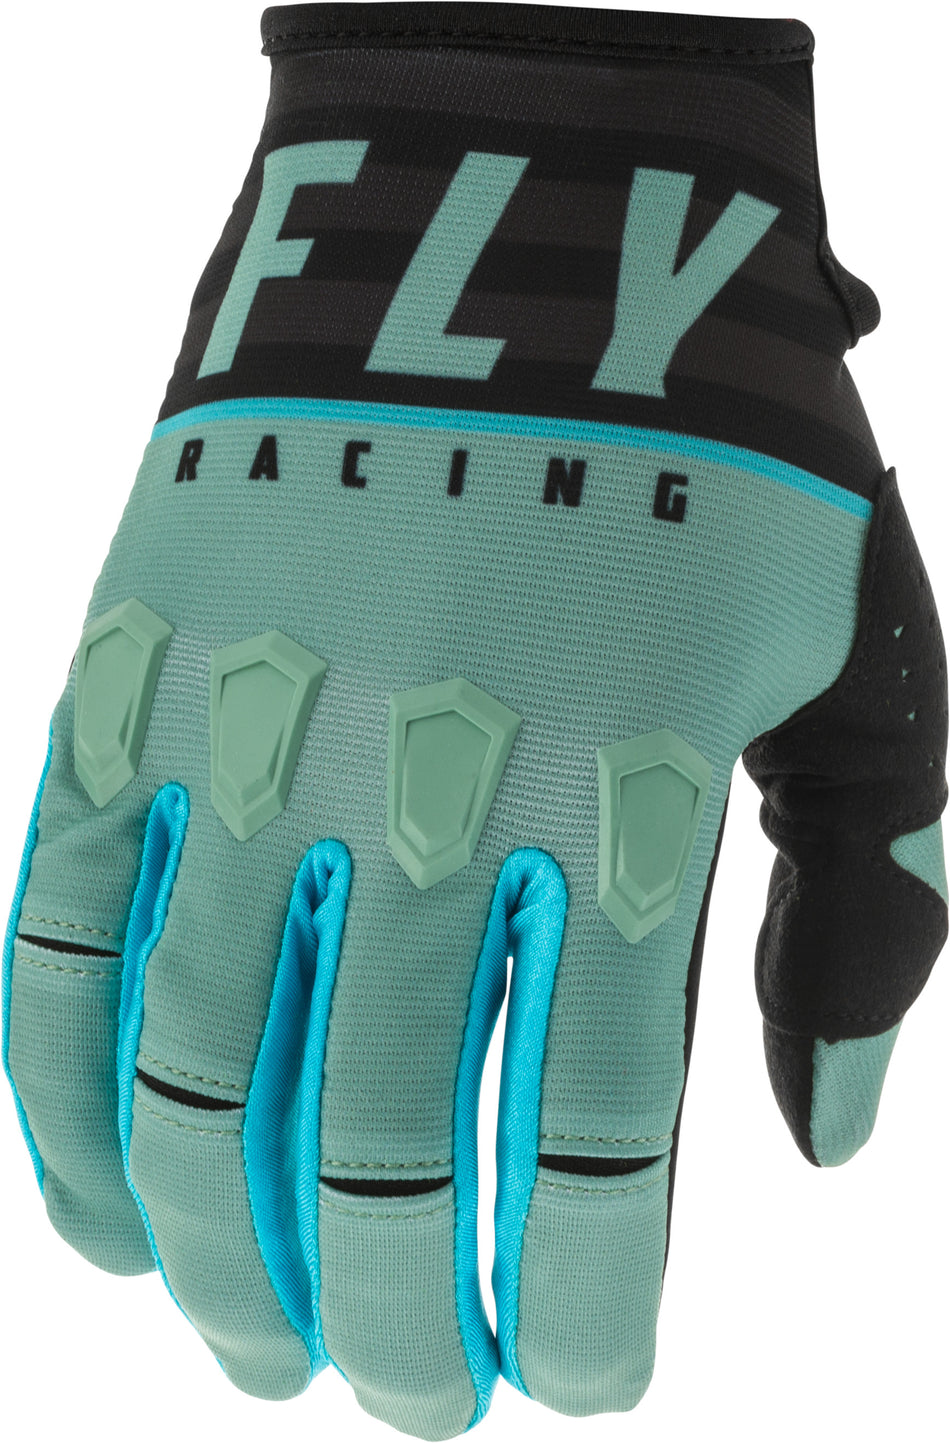 FLY RACING Kinetic K120 Gloves Sage Green/Black Sz 06 373-41606